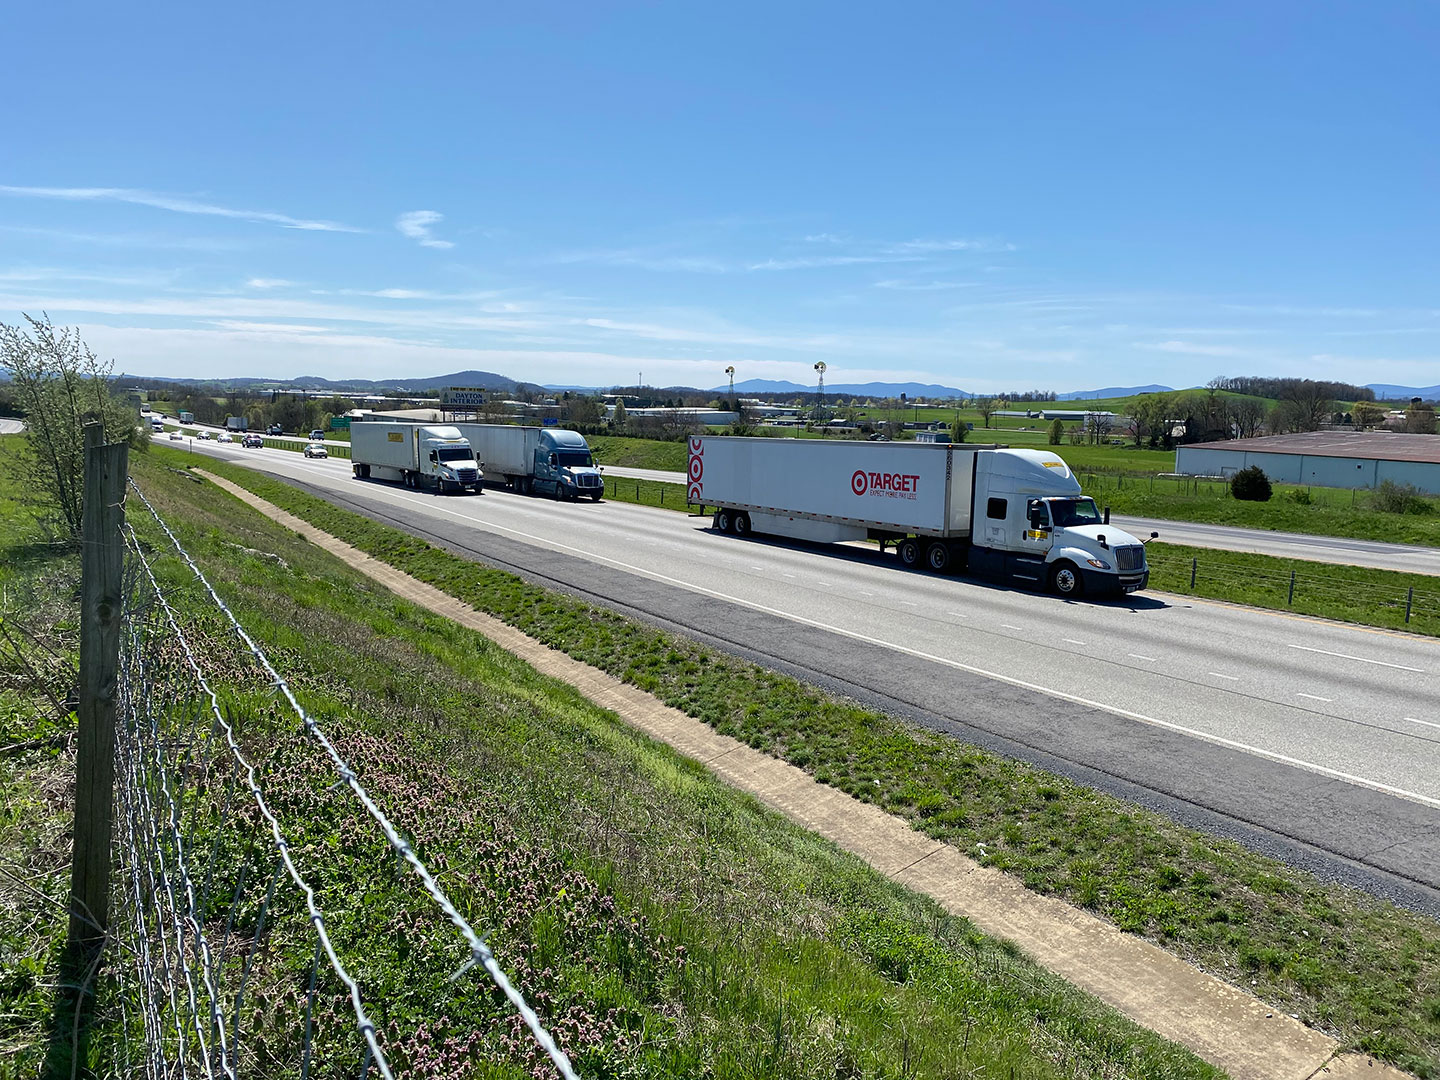 Semi-trucks on a highway interstate.